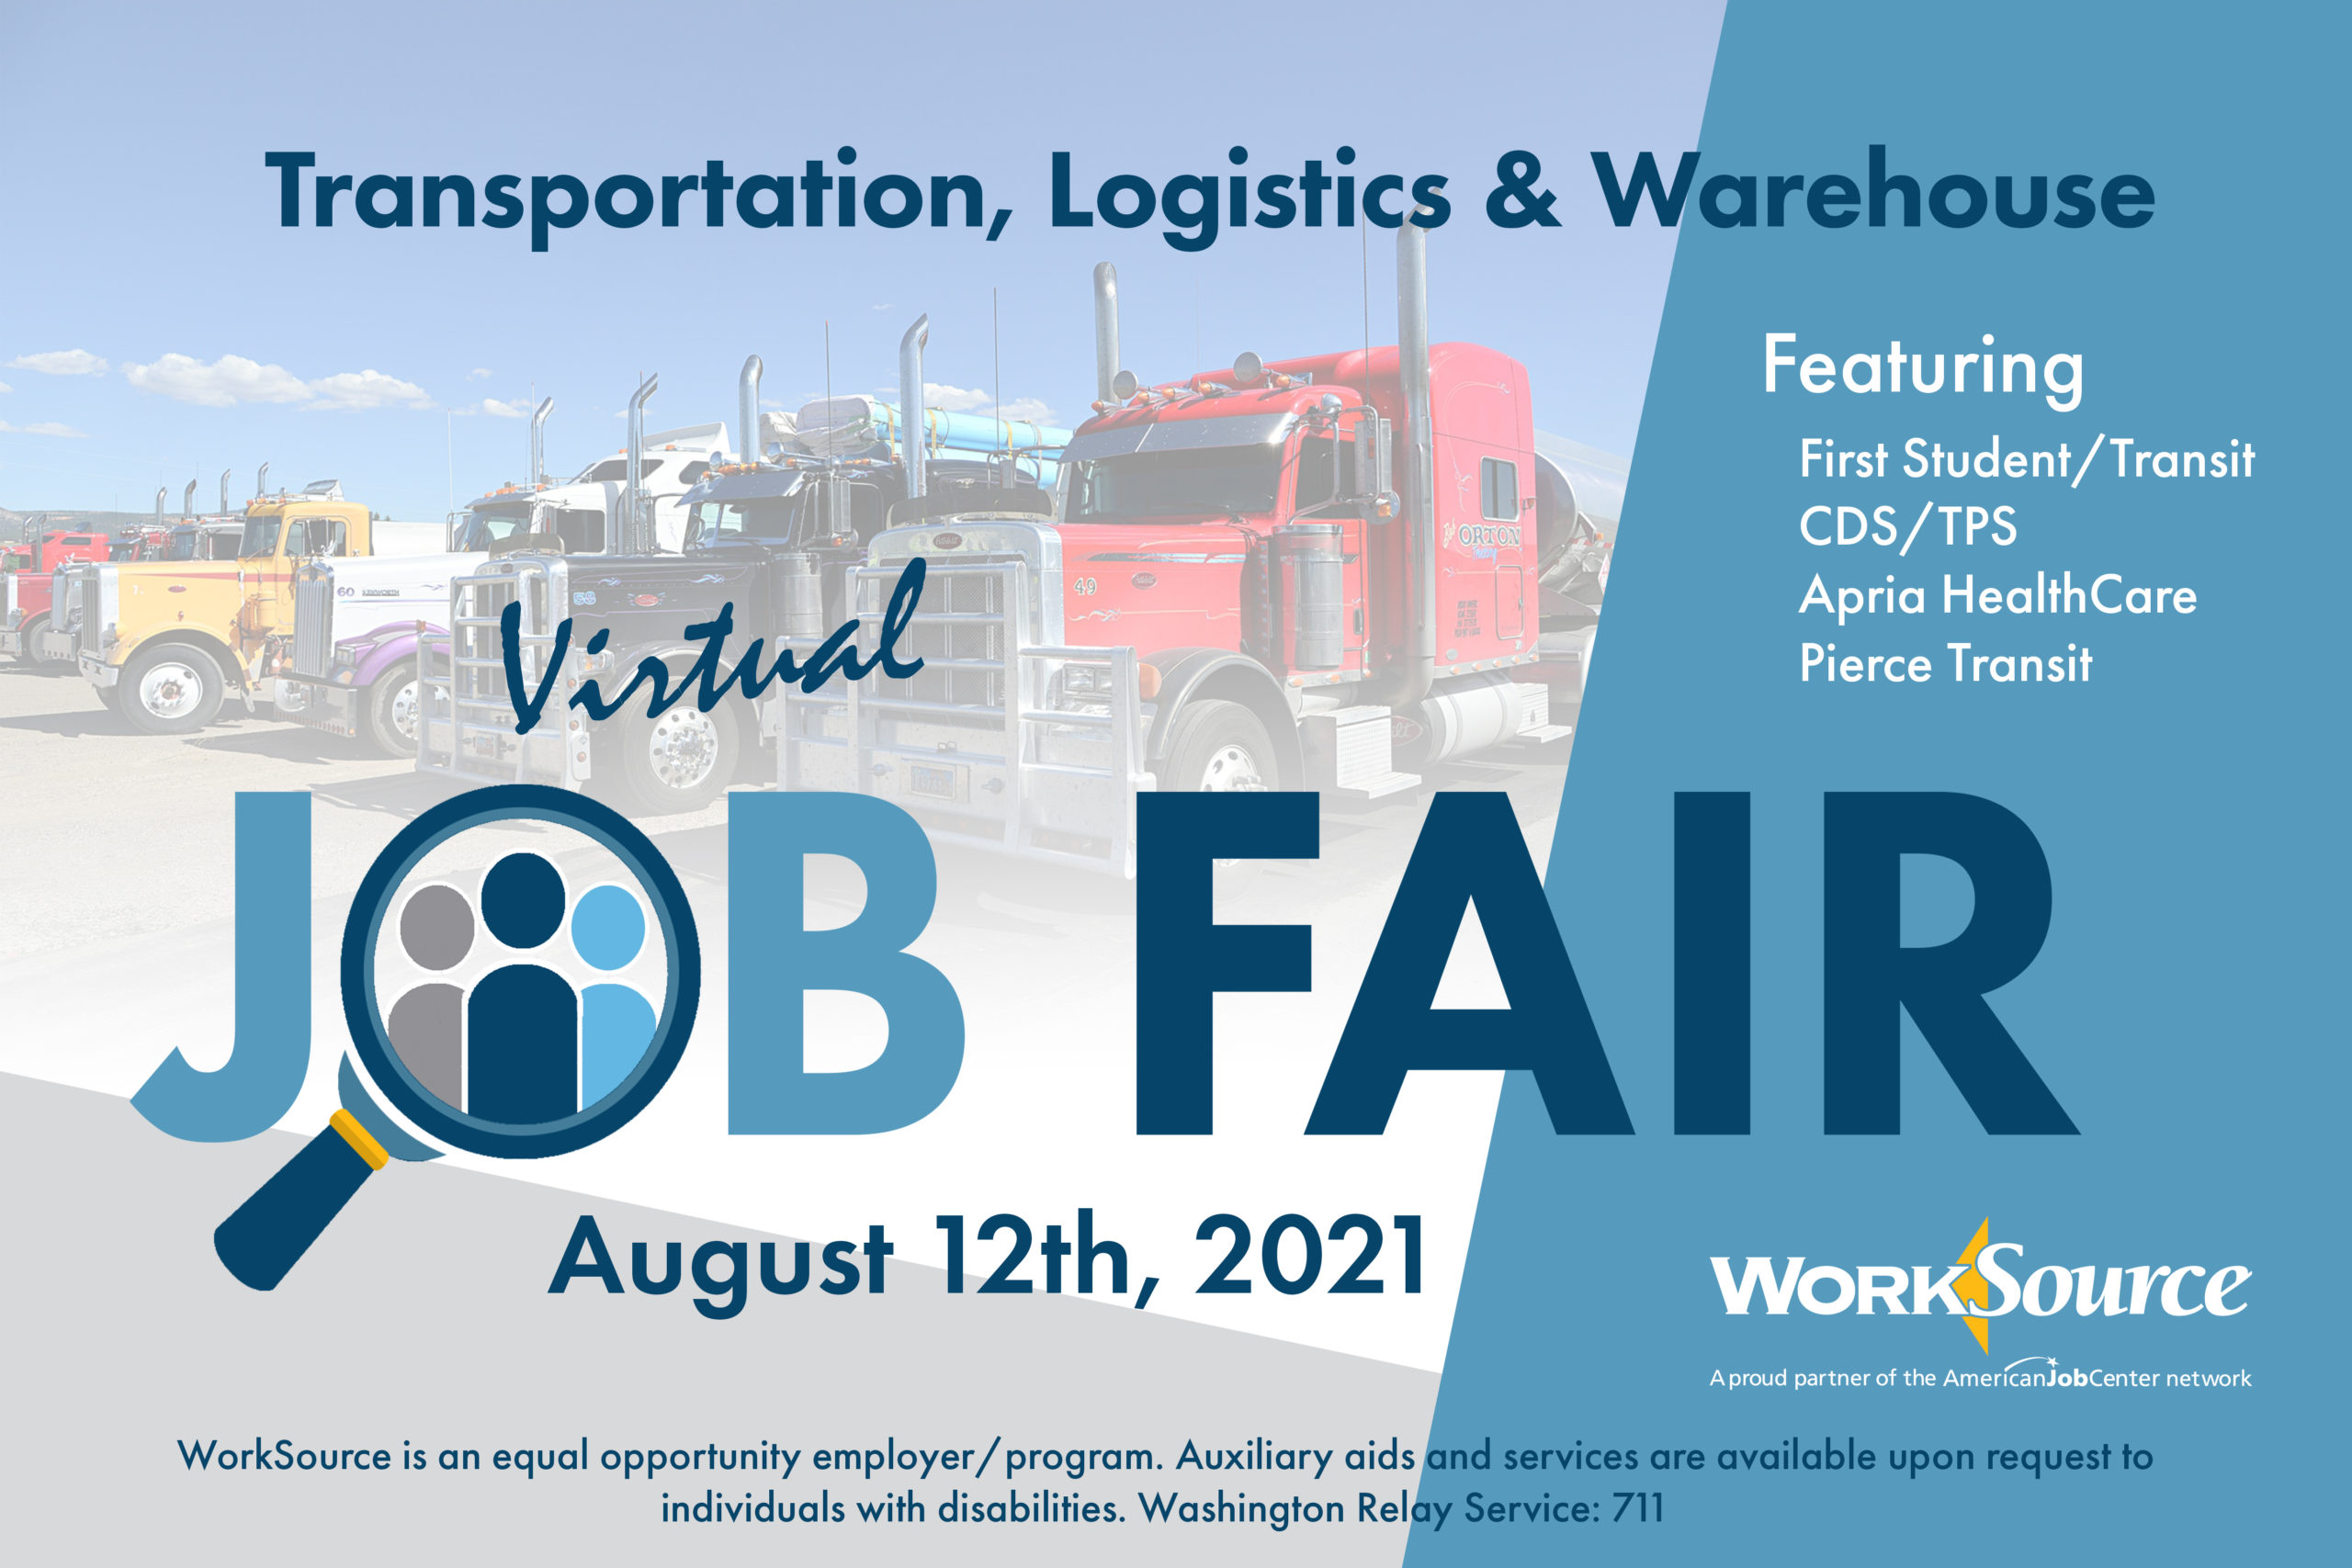 Transportation, Logistics & Warehouse Virtual Career Fair - August 12th 1